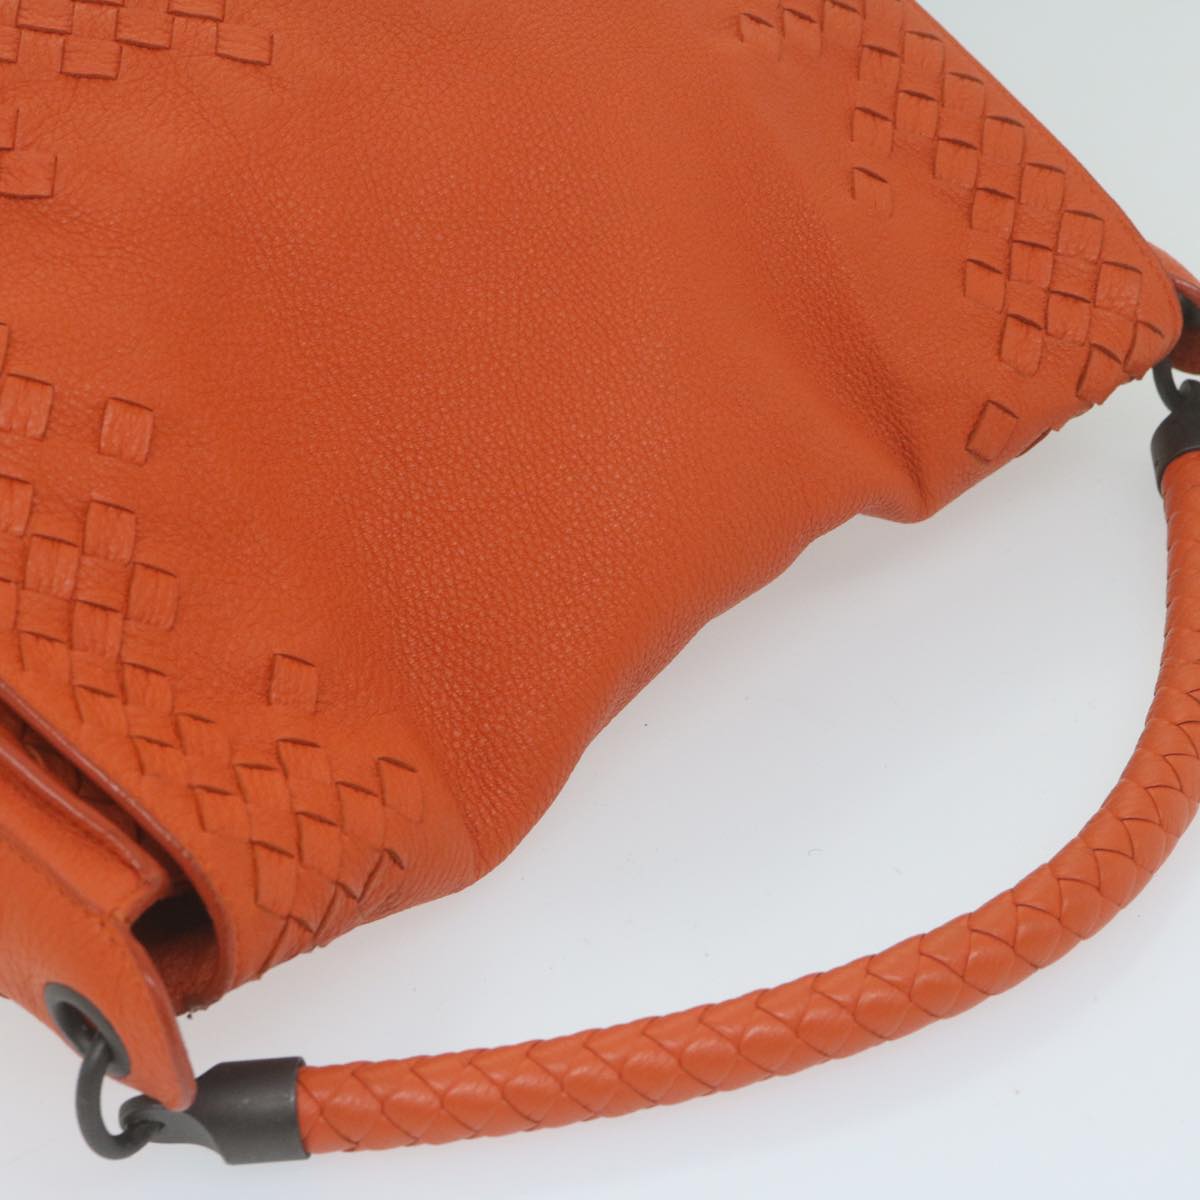 BOTTEGAVENETA INTRECCIATO Shoulder Bag Leather Orange Auth yk10407